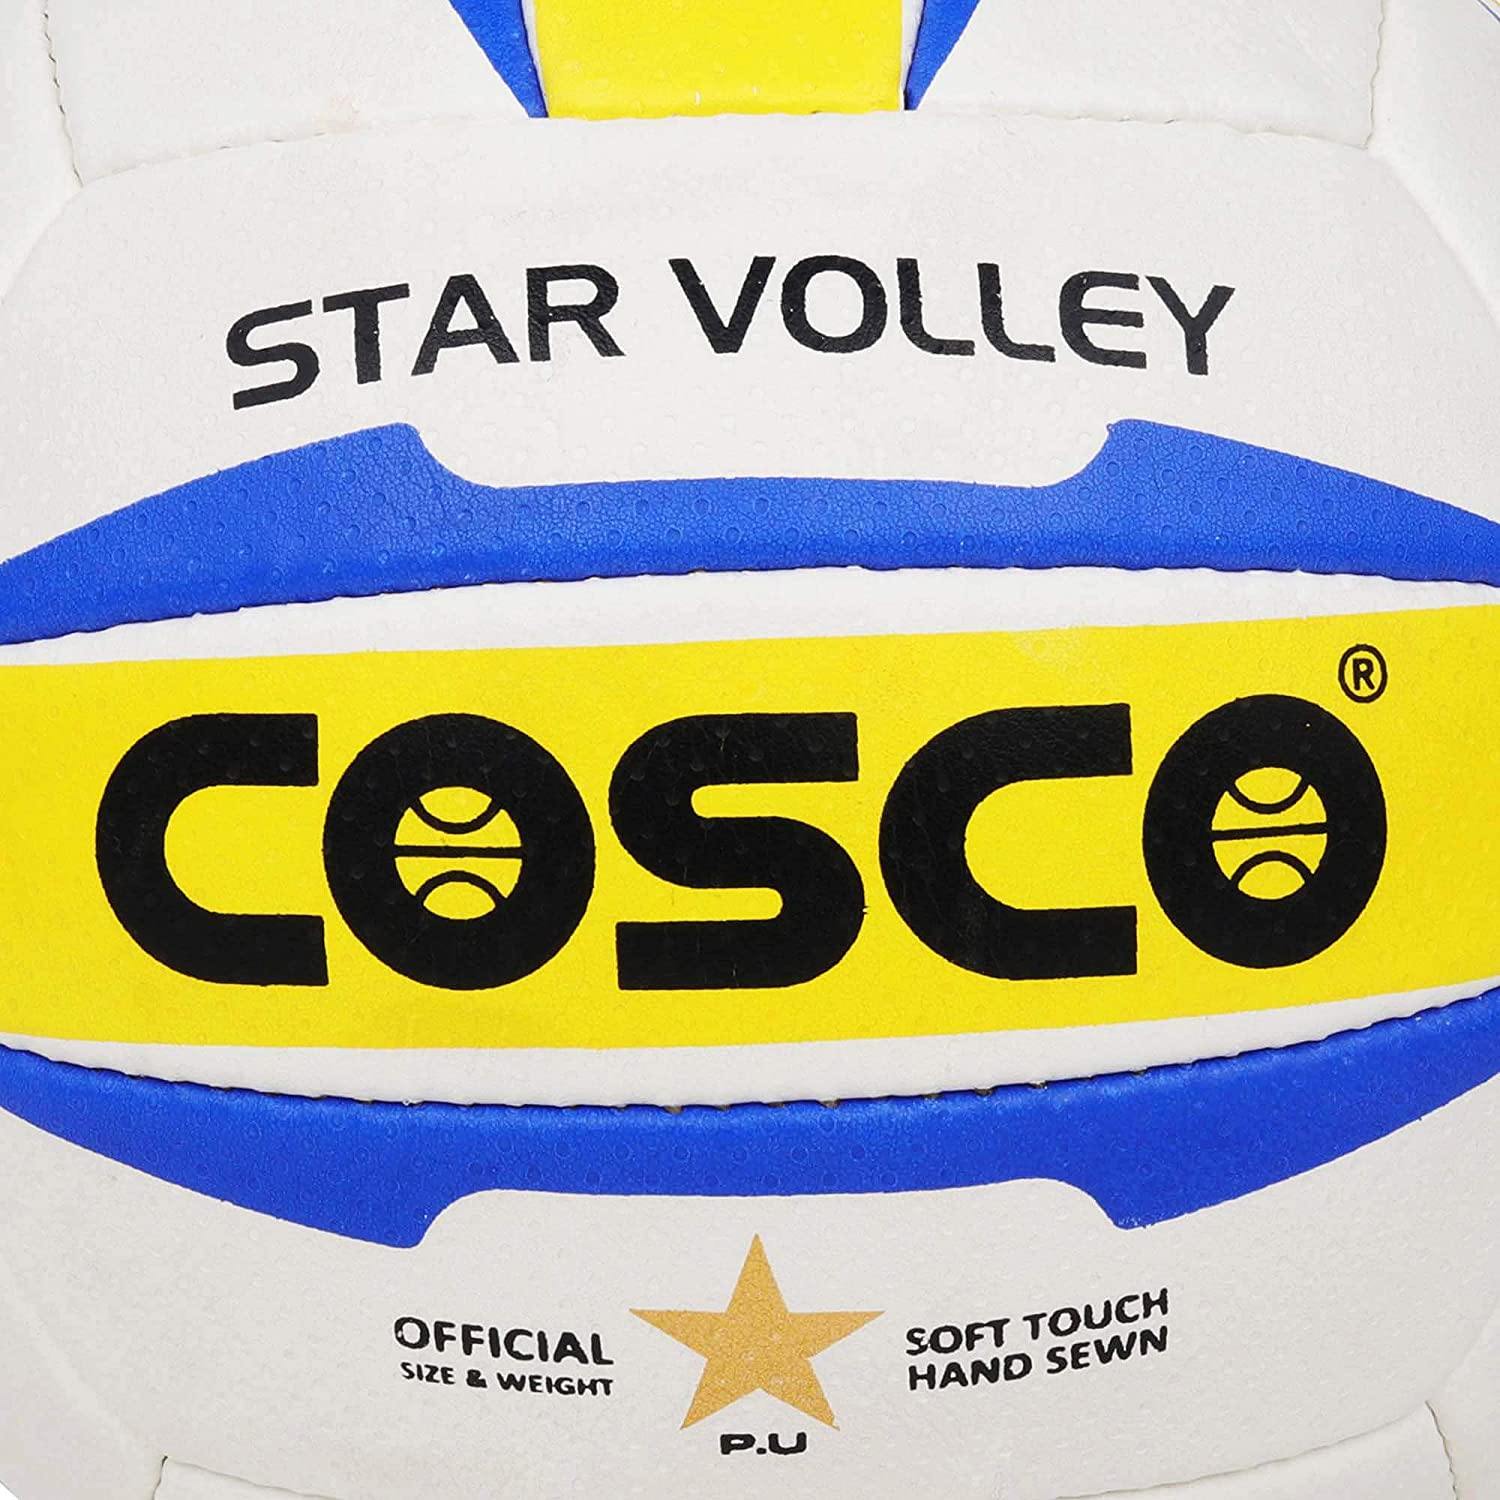 COSCO Cricket /Tennis Ball — Bansal Stationers